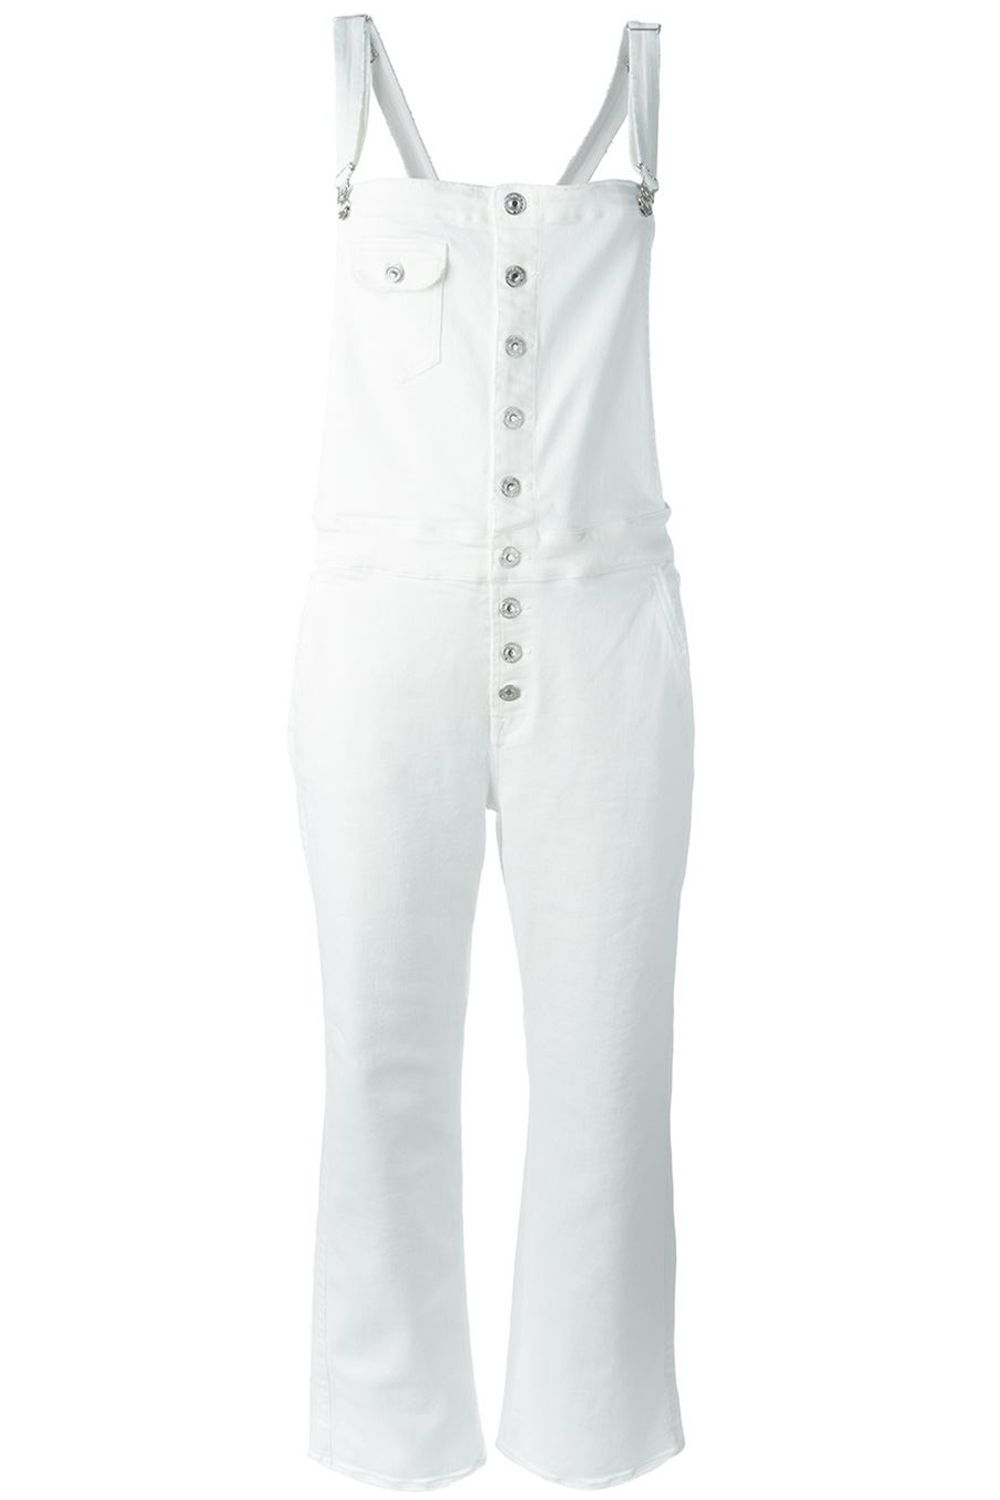 all white overalls